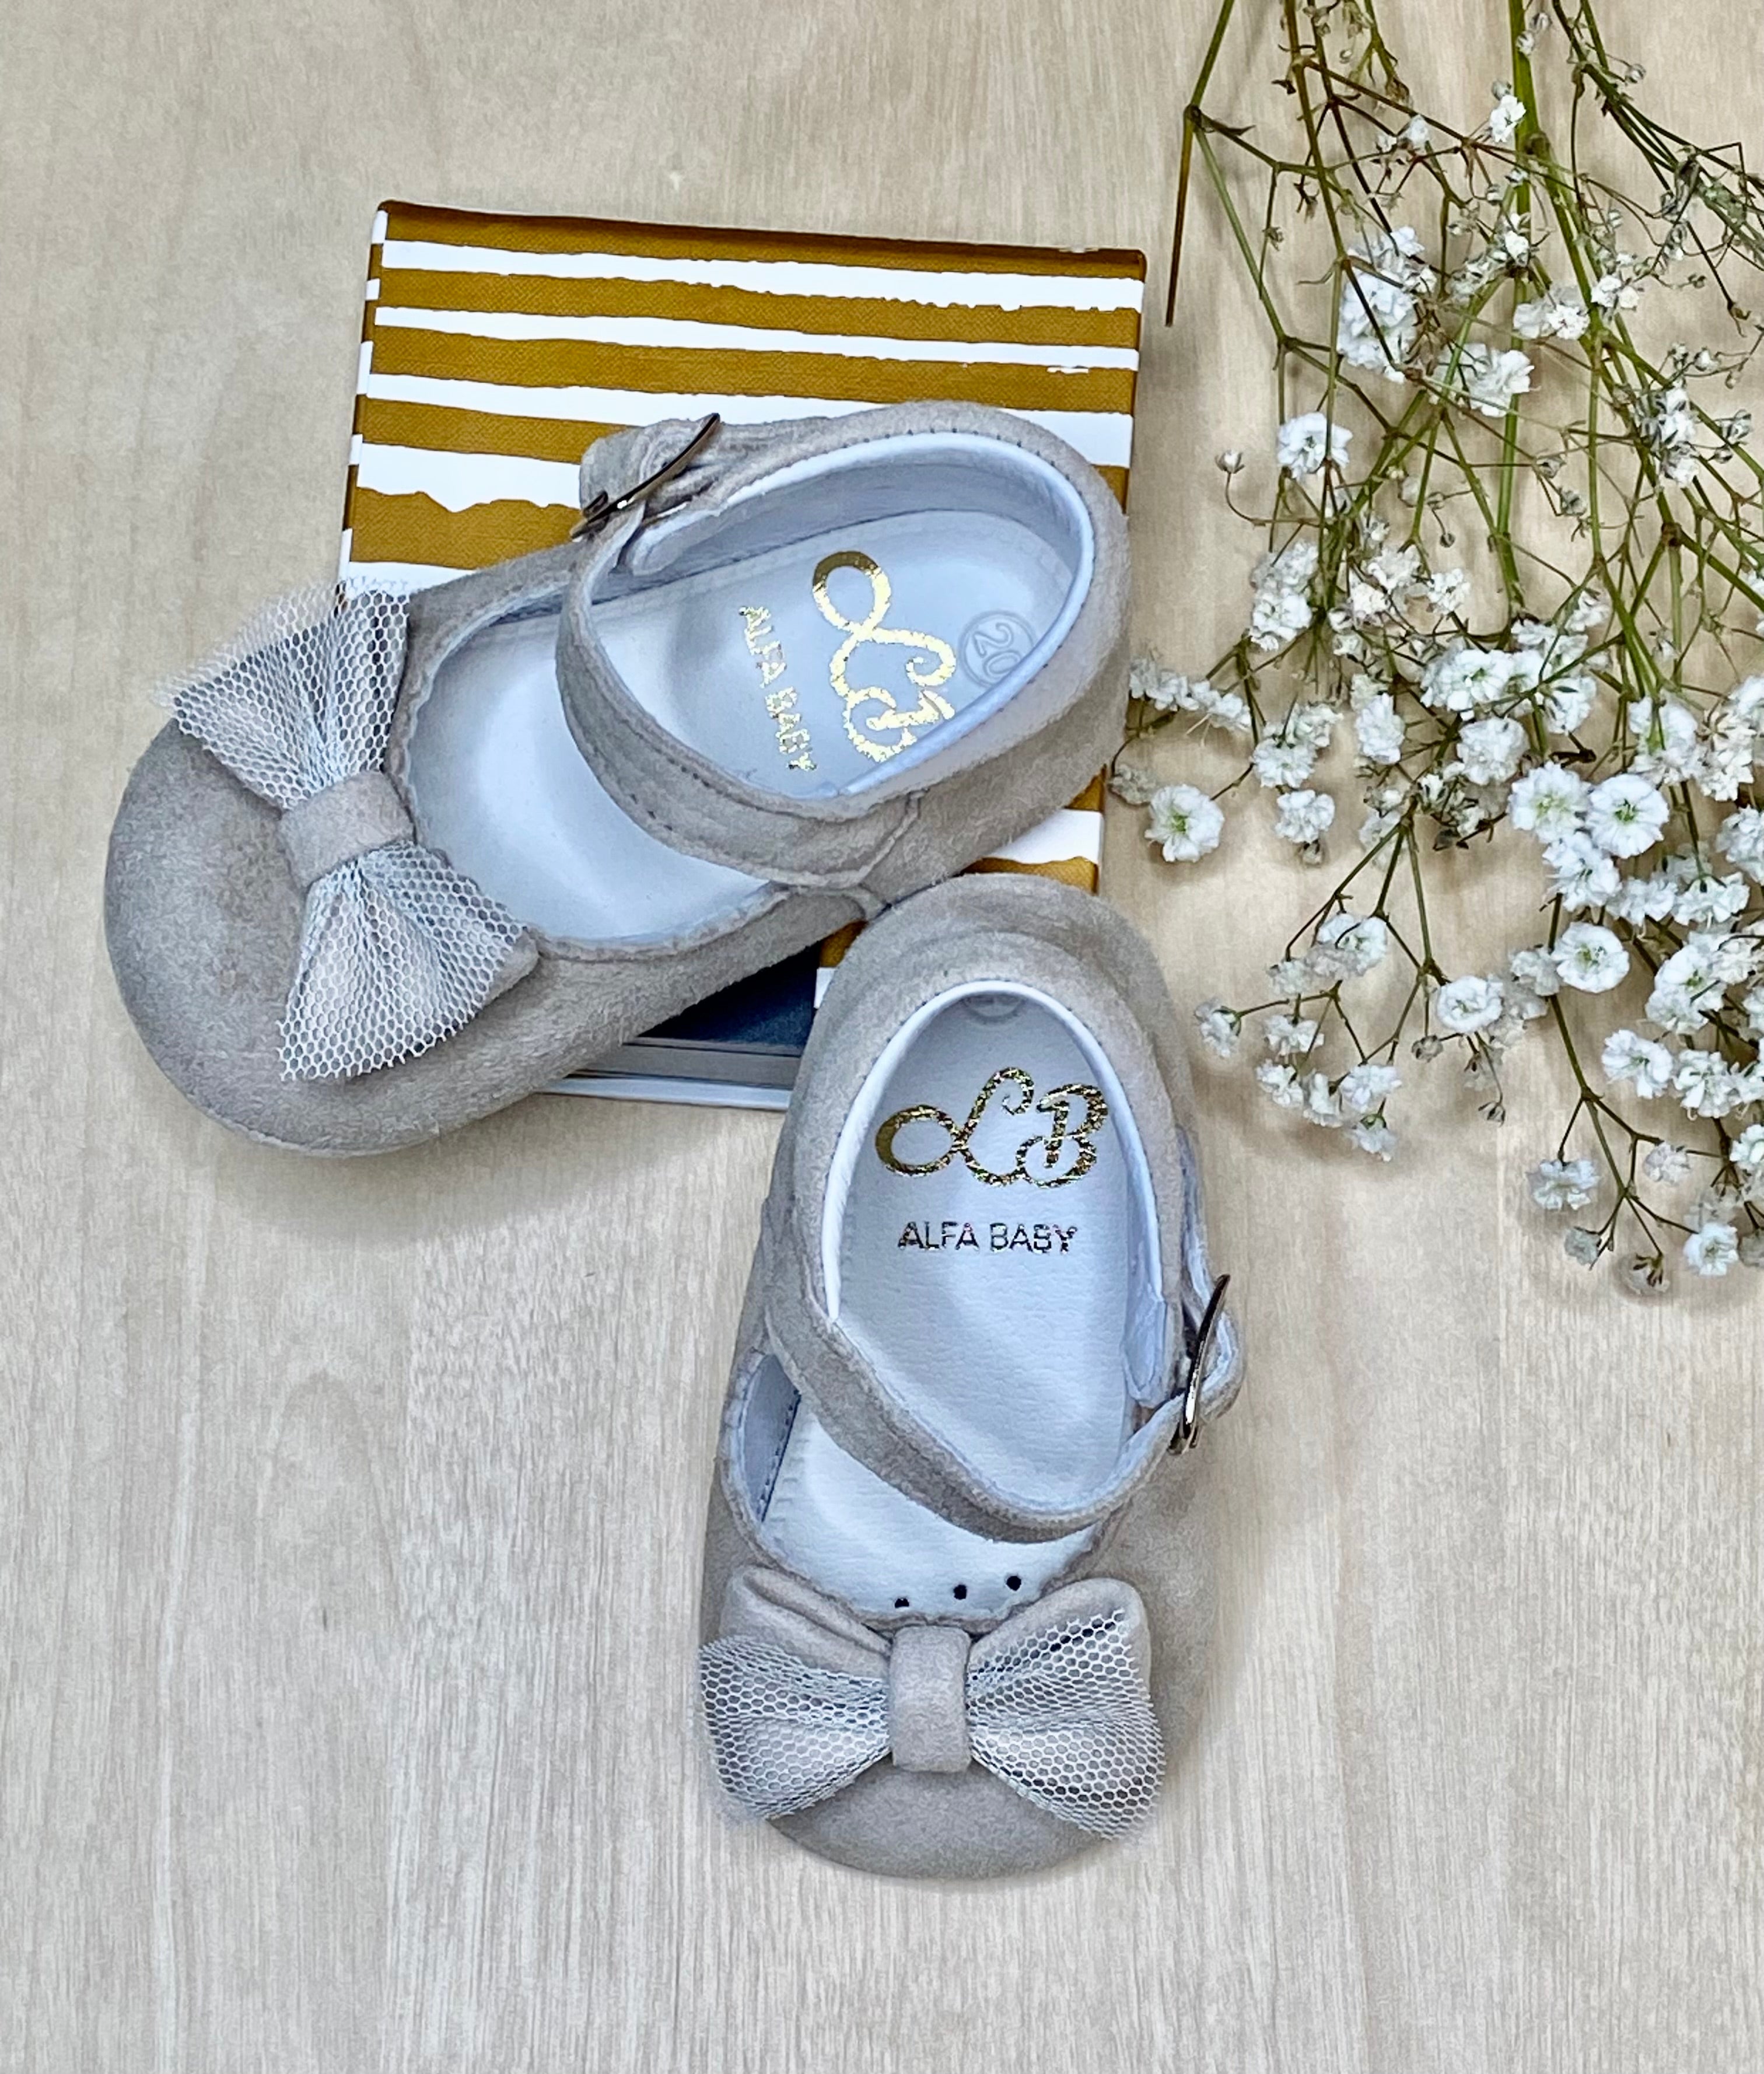 Baby Girl-Infant Shoes Beige-Tan Suede Booties